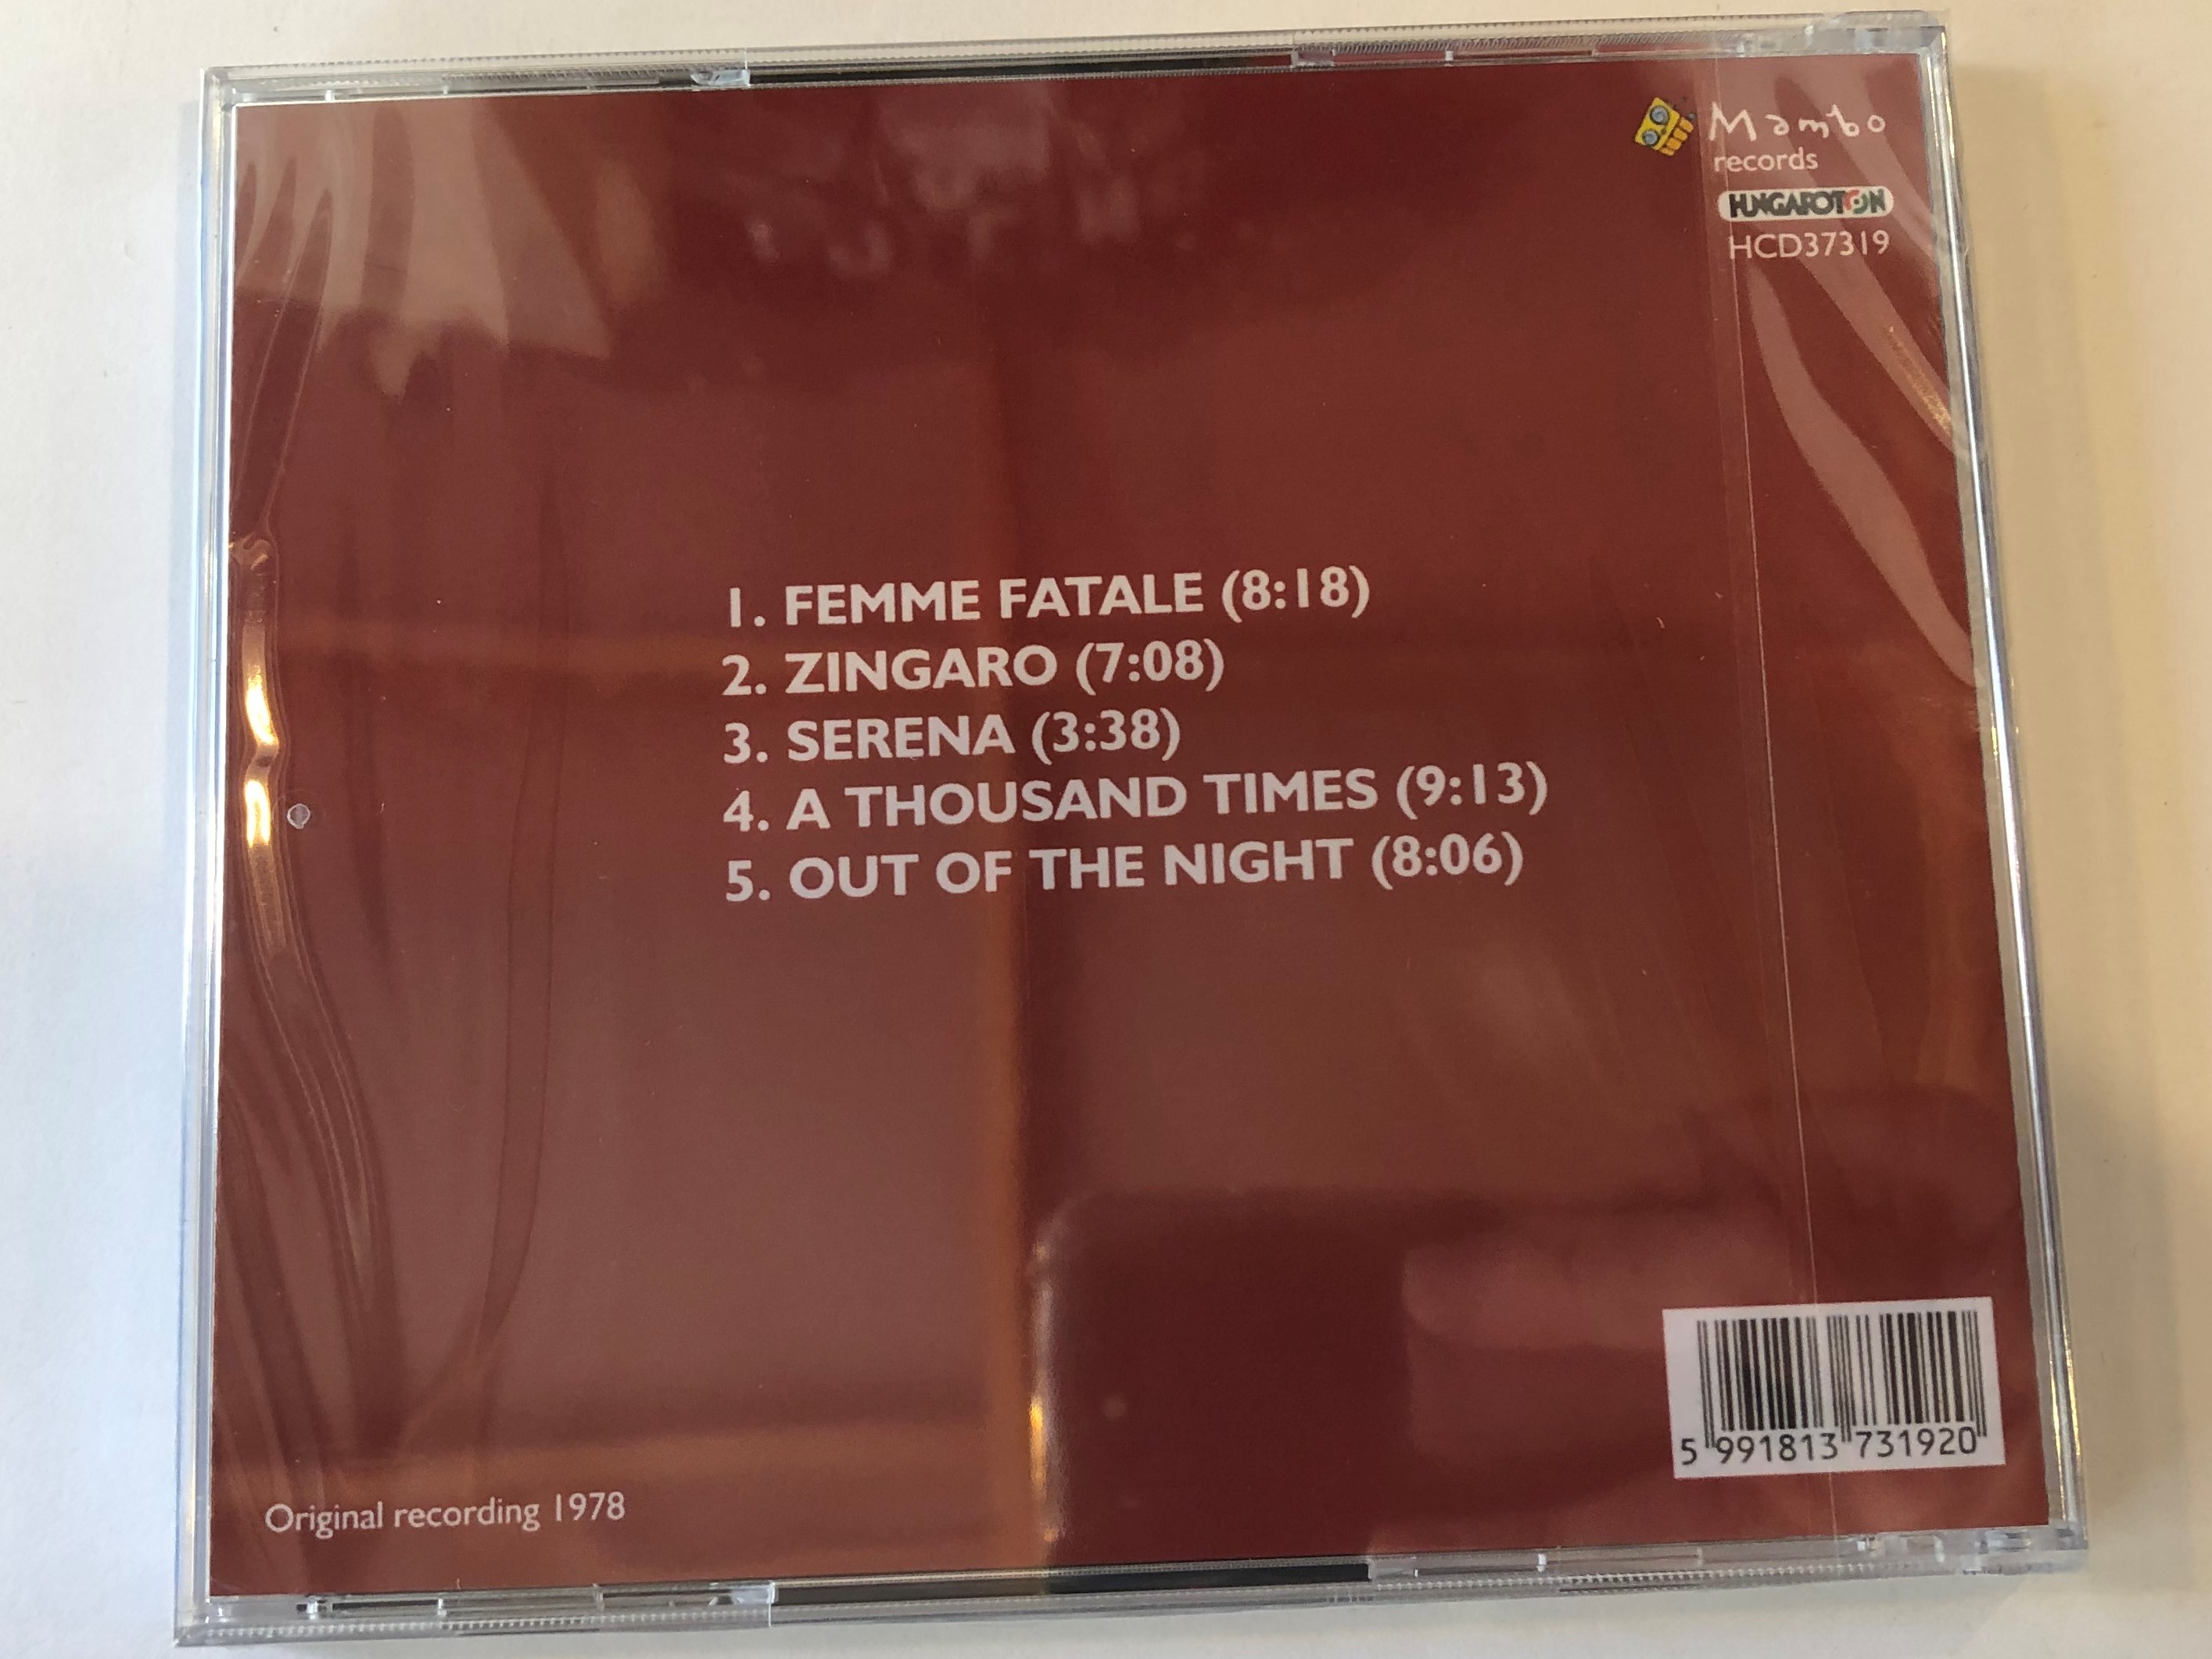 gabor-szabo-femme-fatale-featuring-chick-corea-mambo-records-audio-cd-hcd-37319-2-.jpg